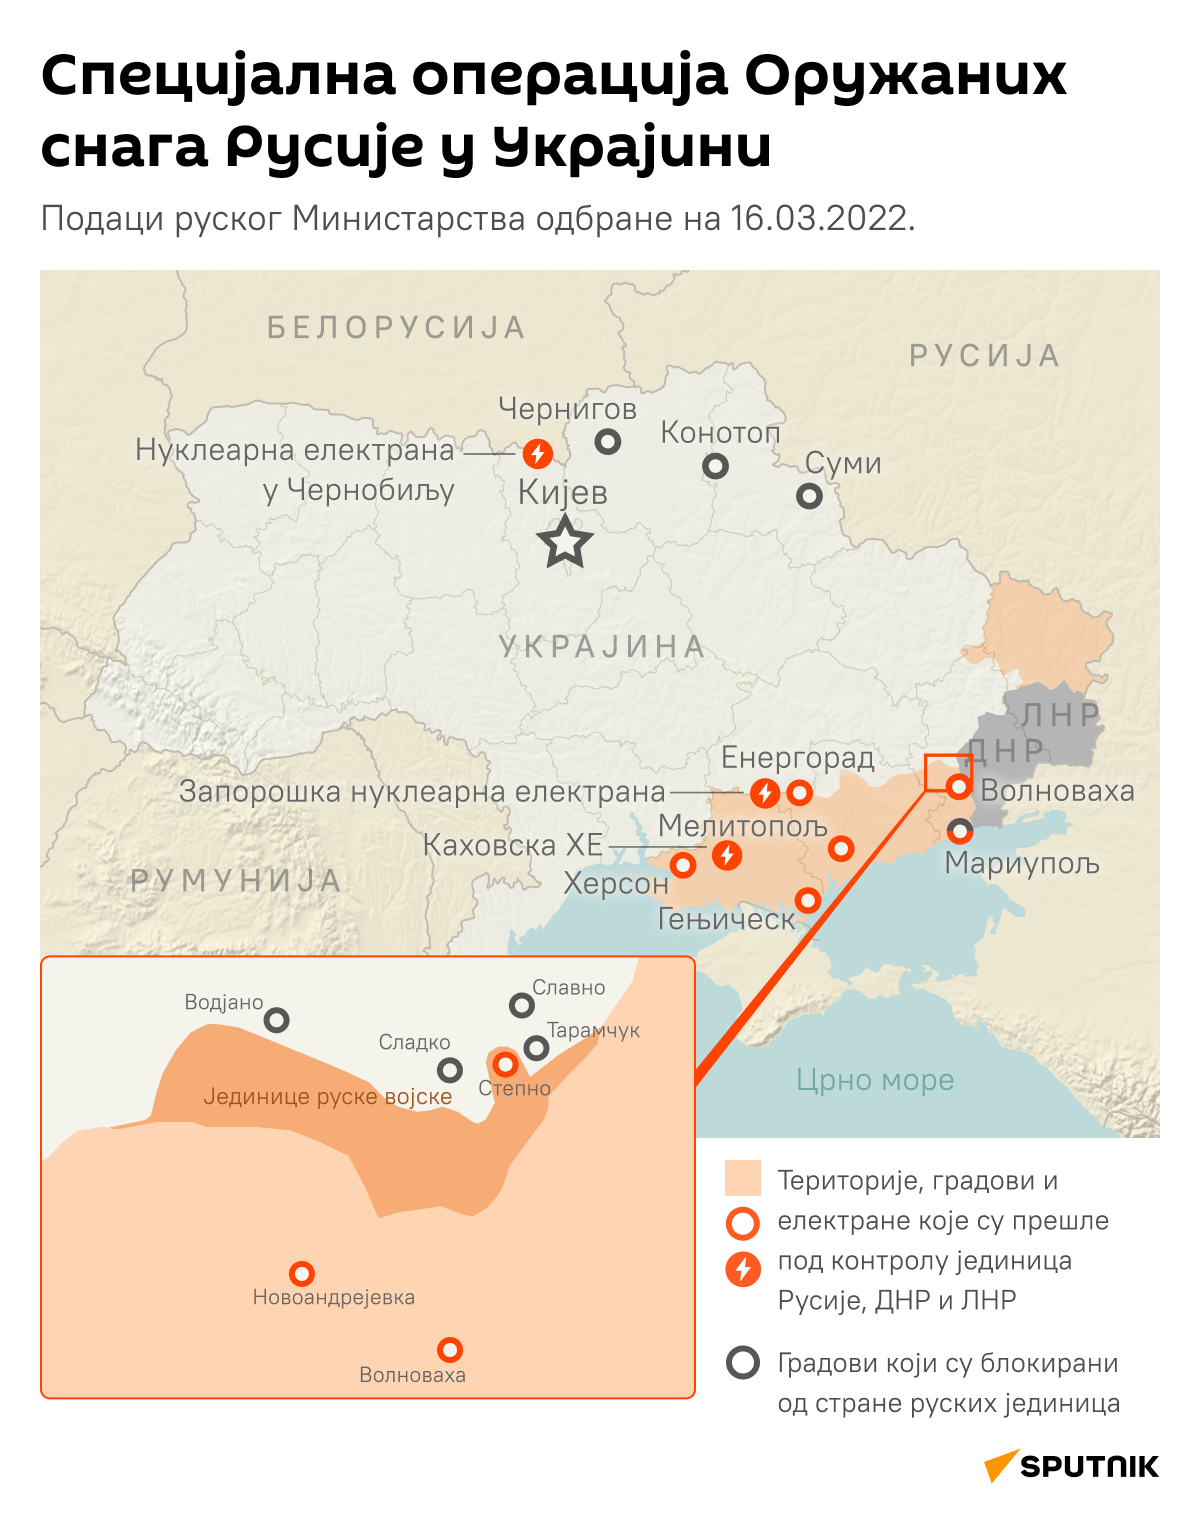  мапа  операциjе ЋИР деск - Sputnik Србија